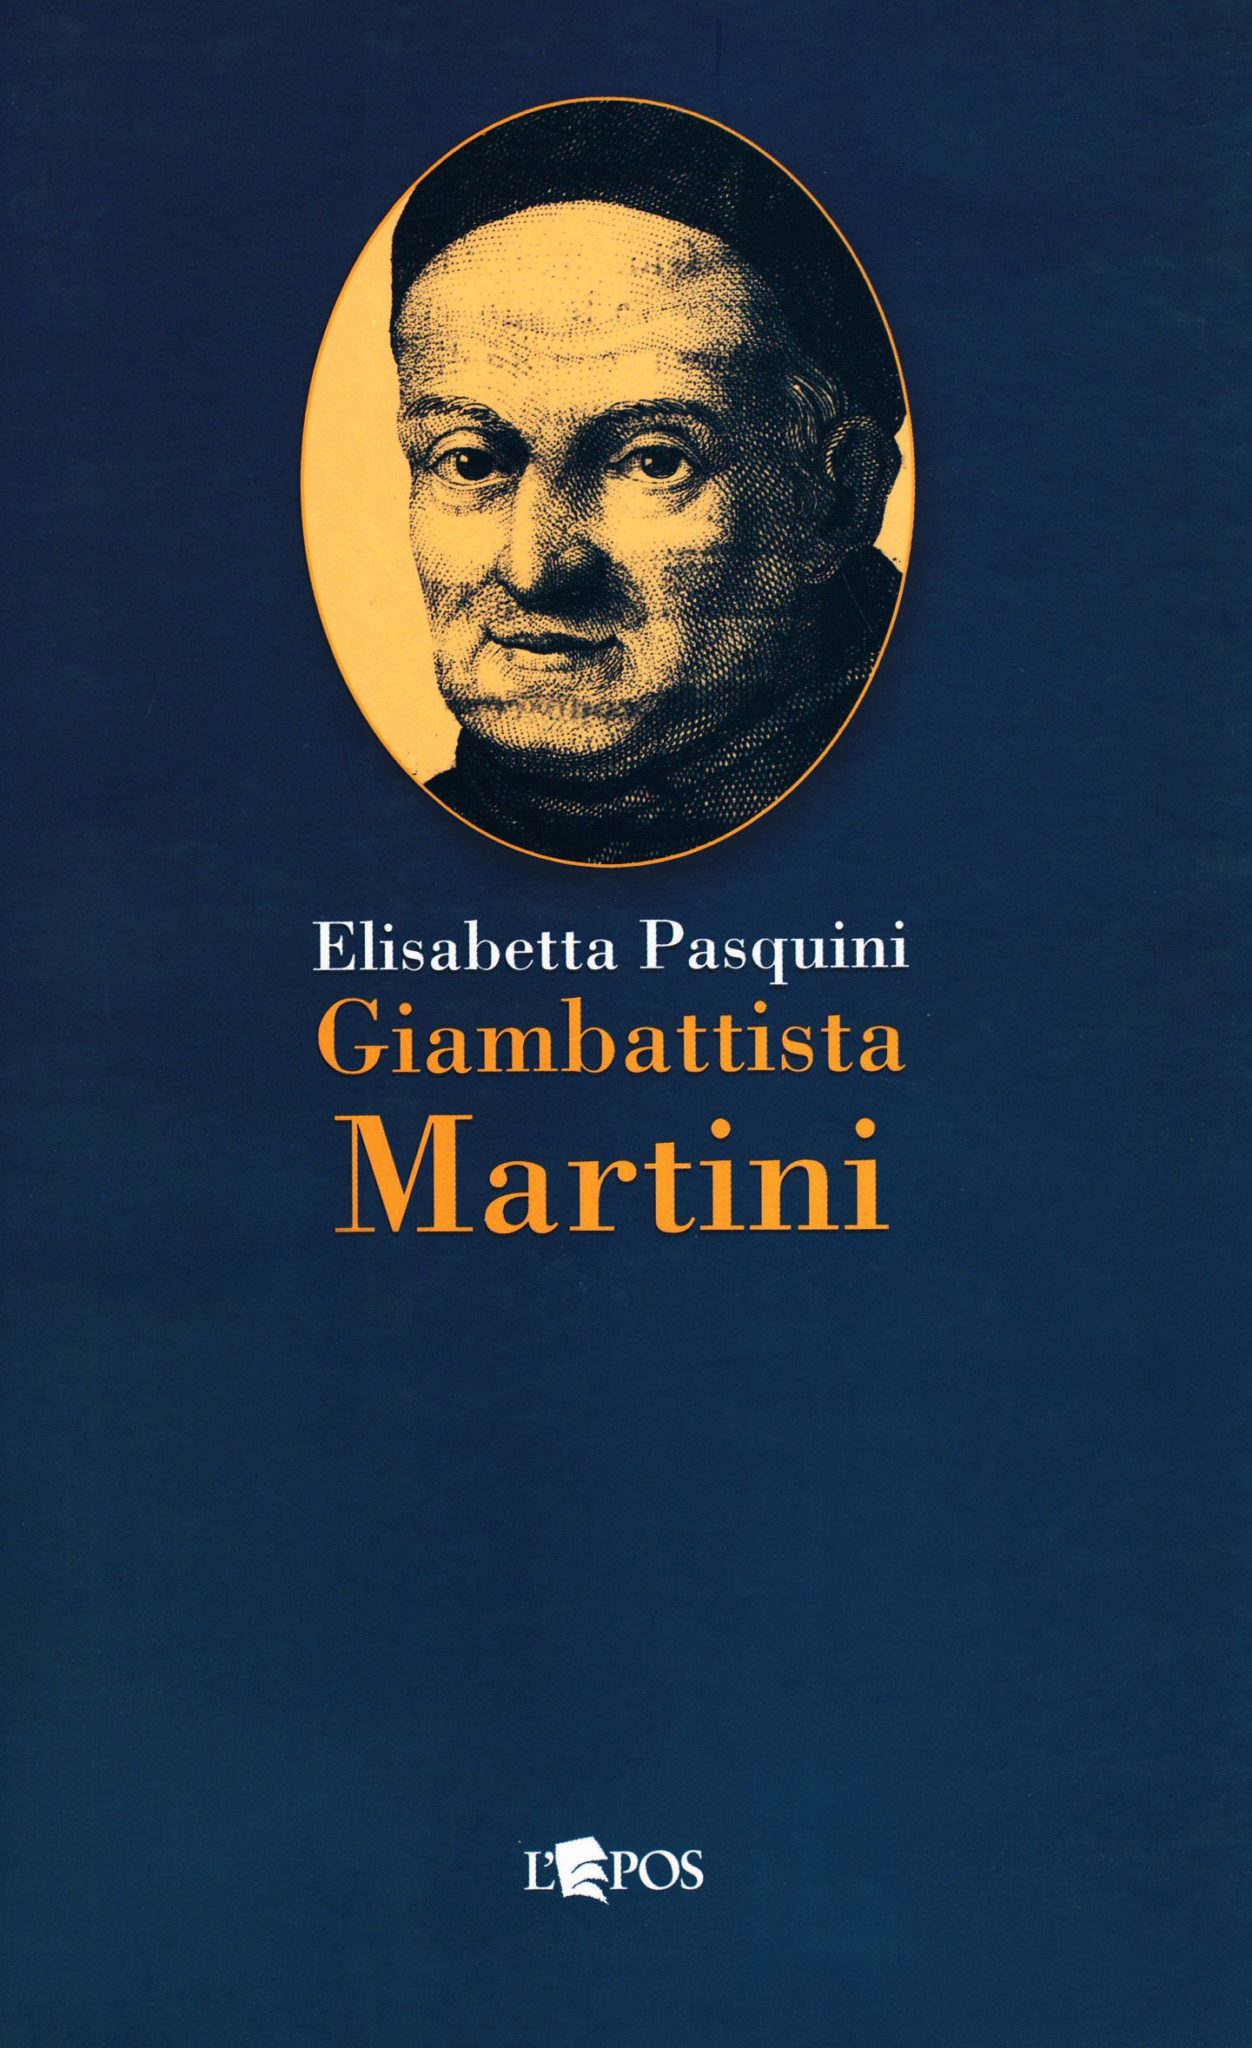 Padre Martini